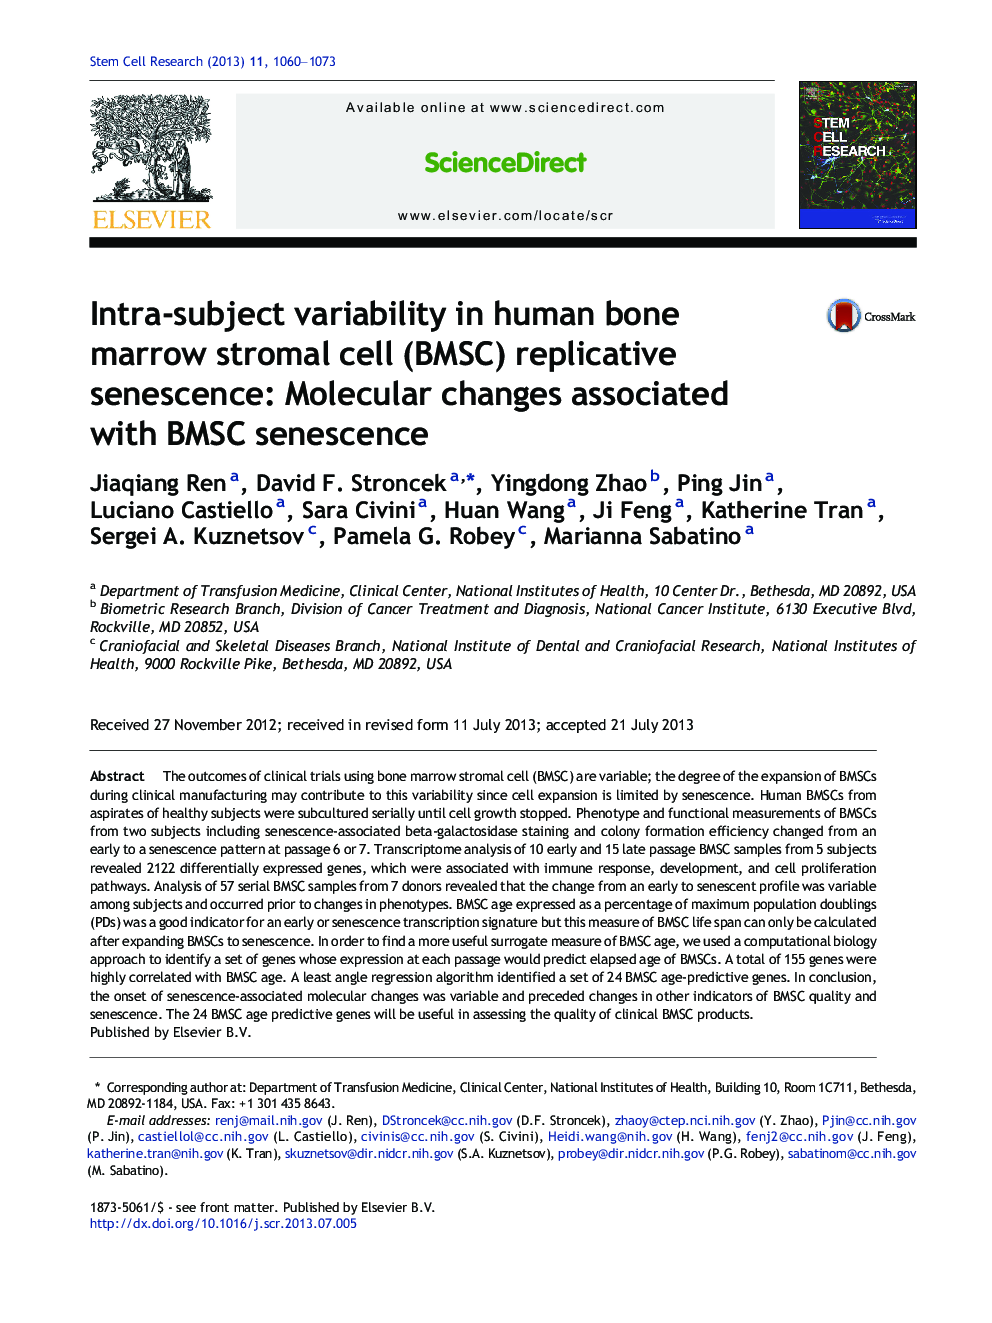 Intra-subject variability in human bone marrow stromal cell (BMSC) replicative senescence: Molecular changes associated with BMSC senescence